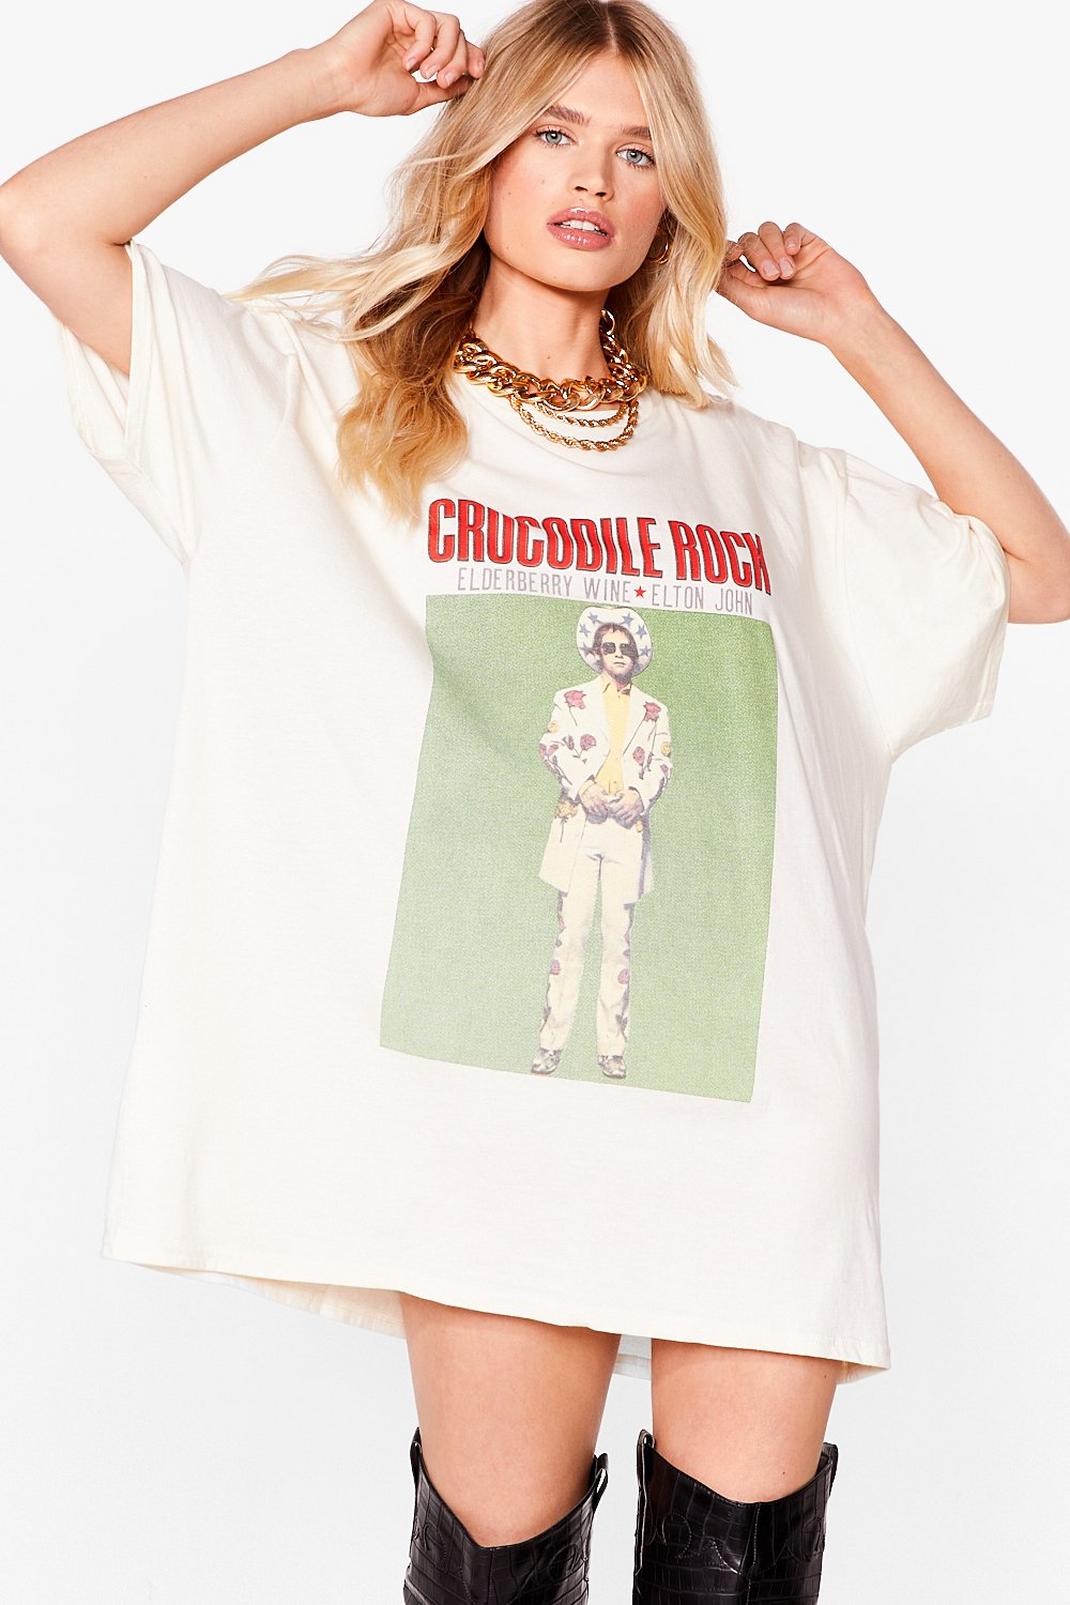 Natural Crocodile Rock Graphic Band T-Shirt Dress image number 1